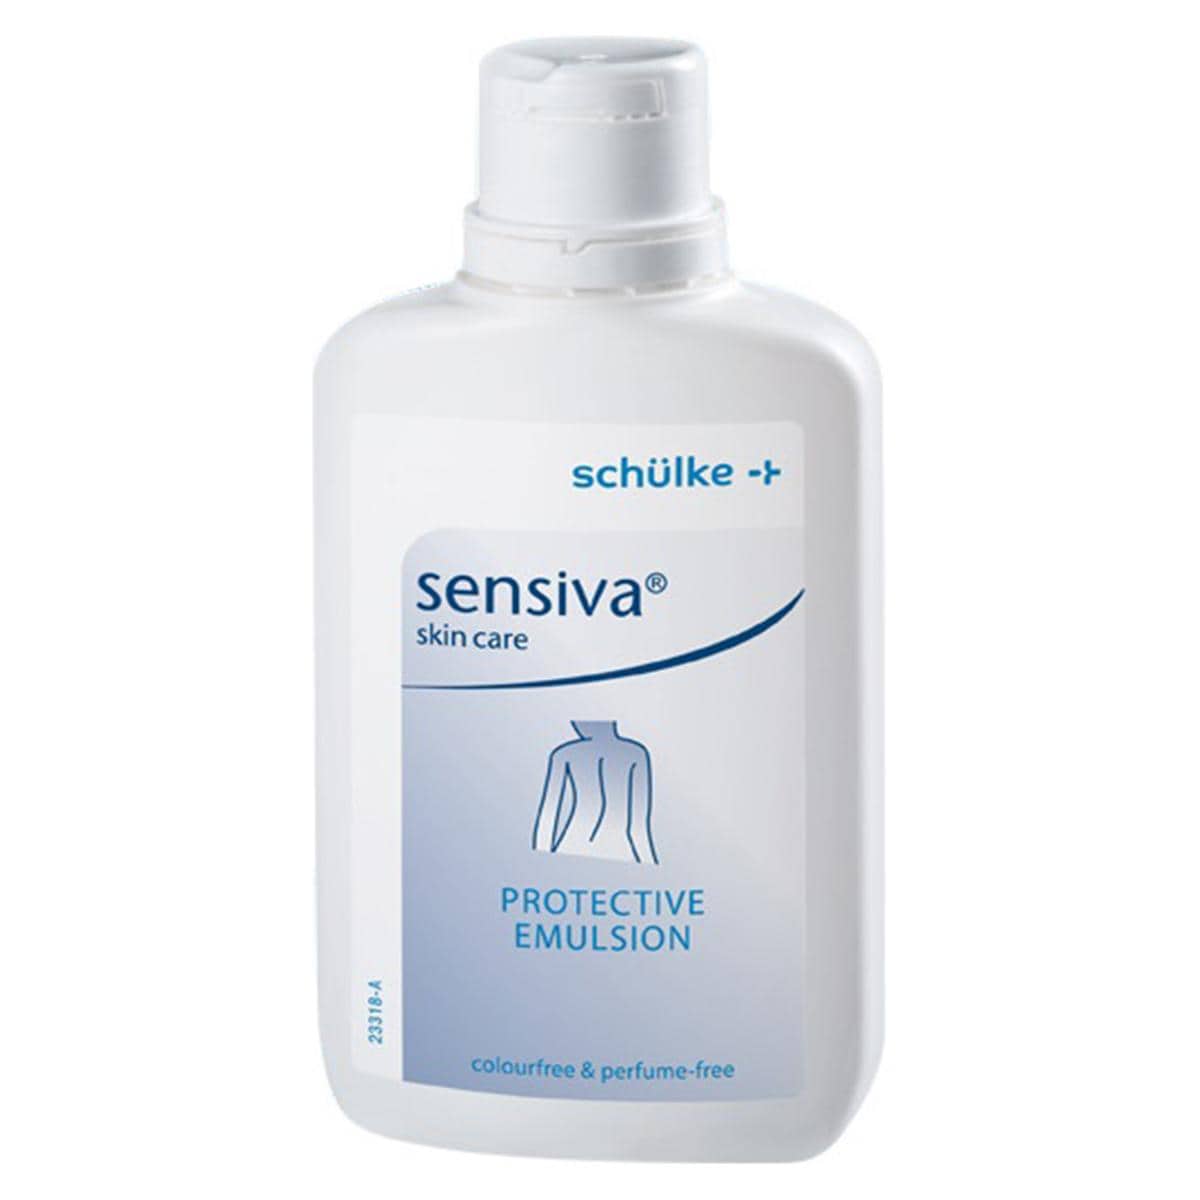 sensiva® protective emulsion - Flasche 150 ml